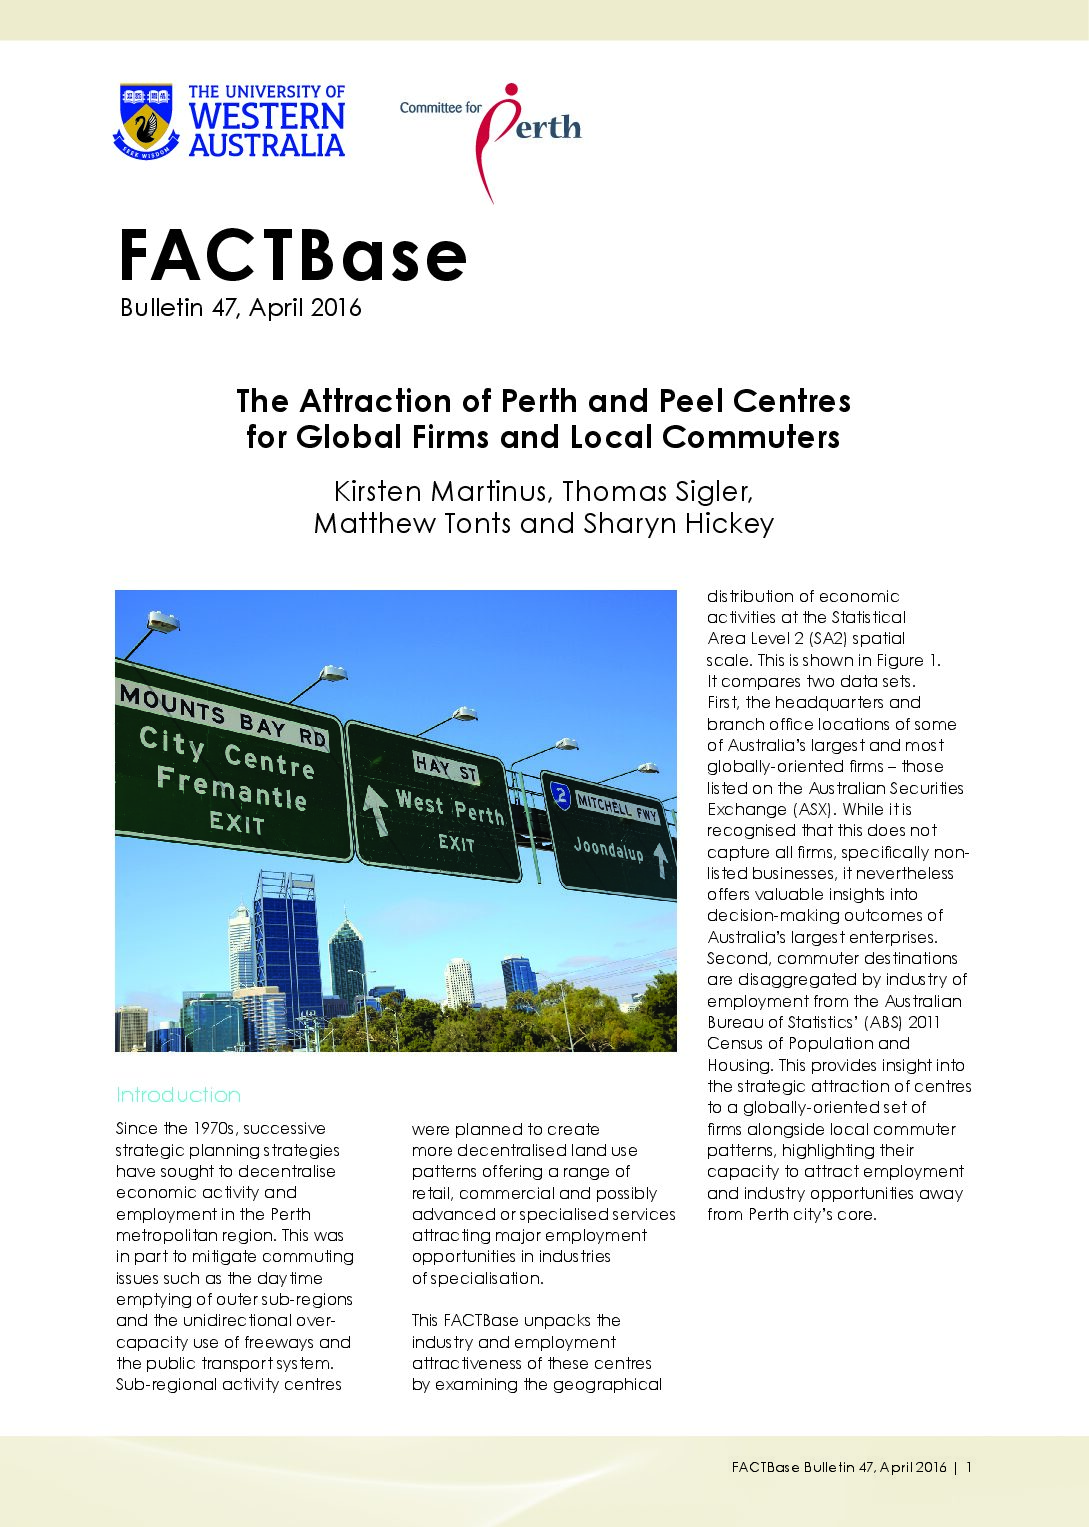 FACTBase Bulletin 47 - April 2016